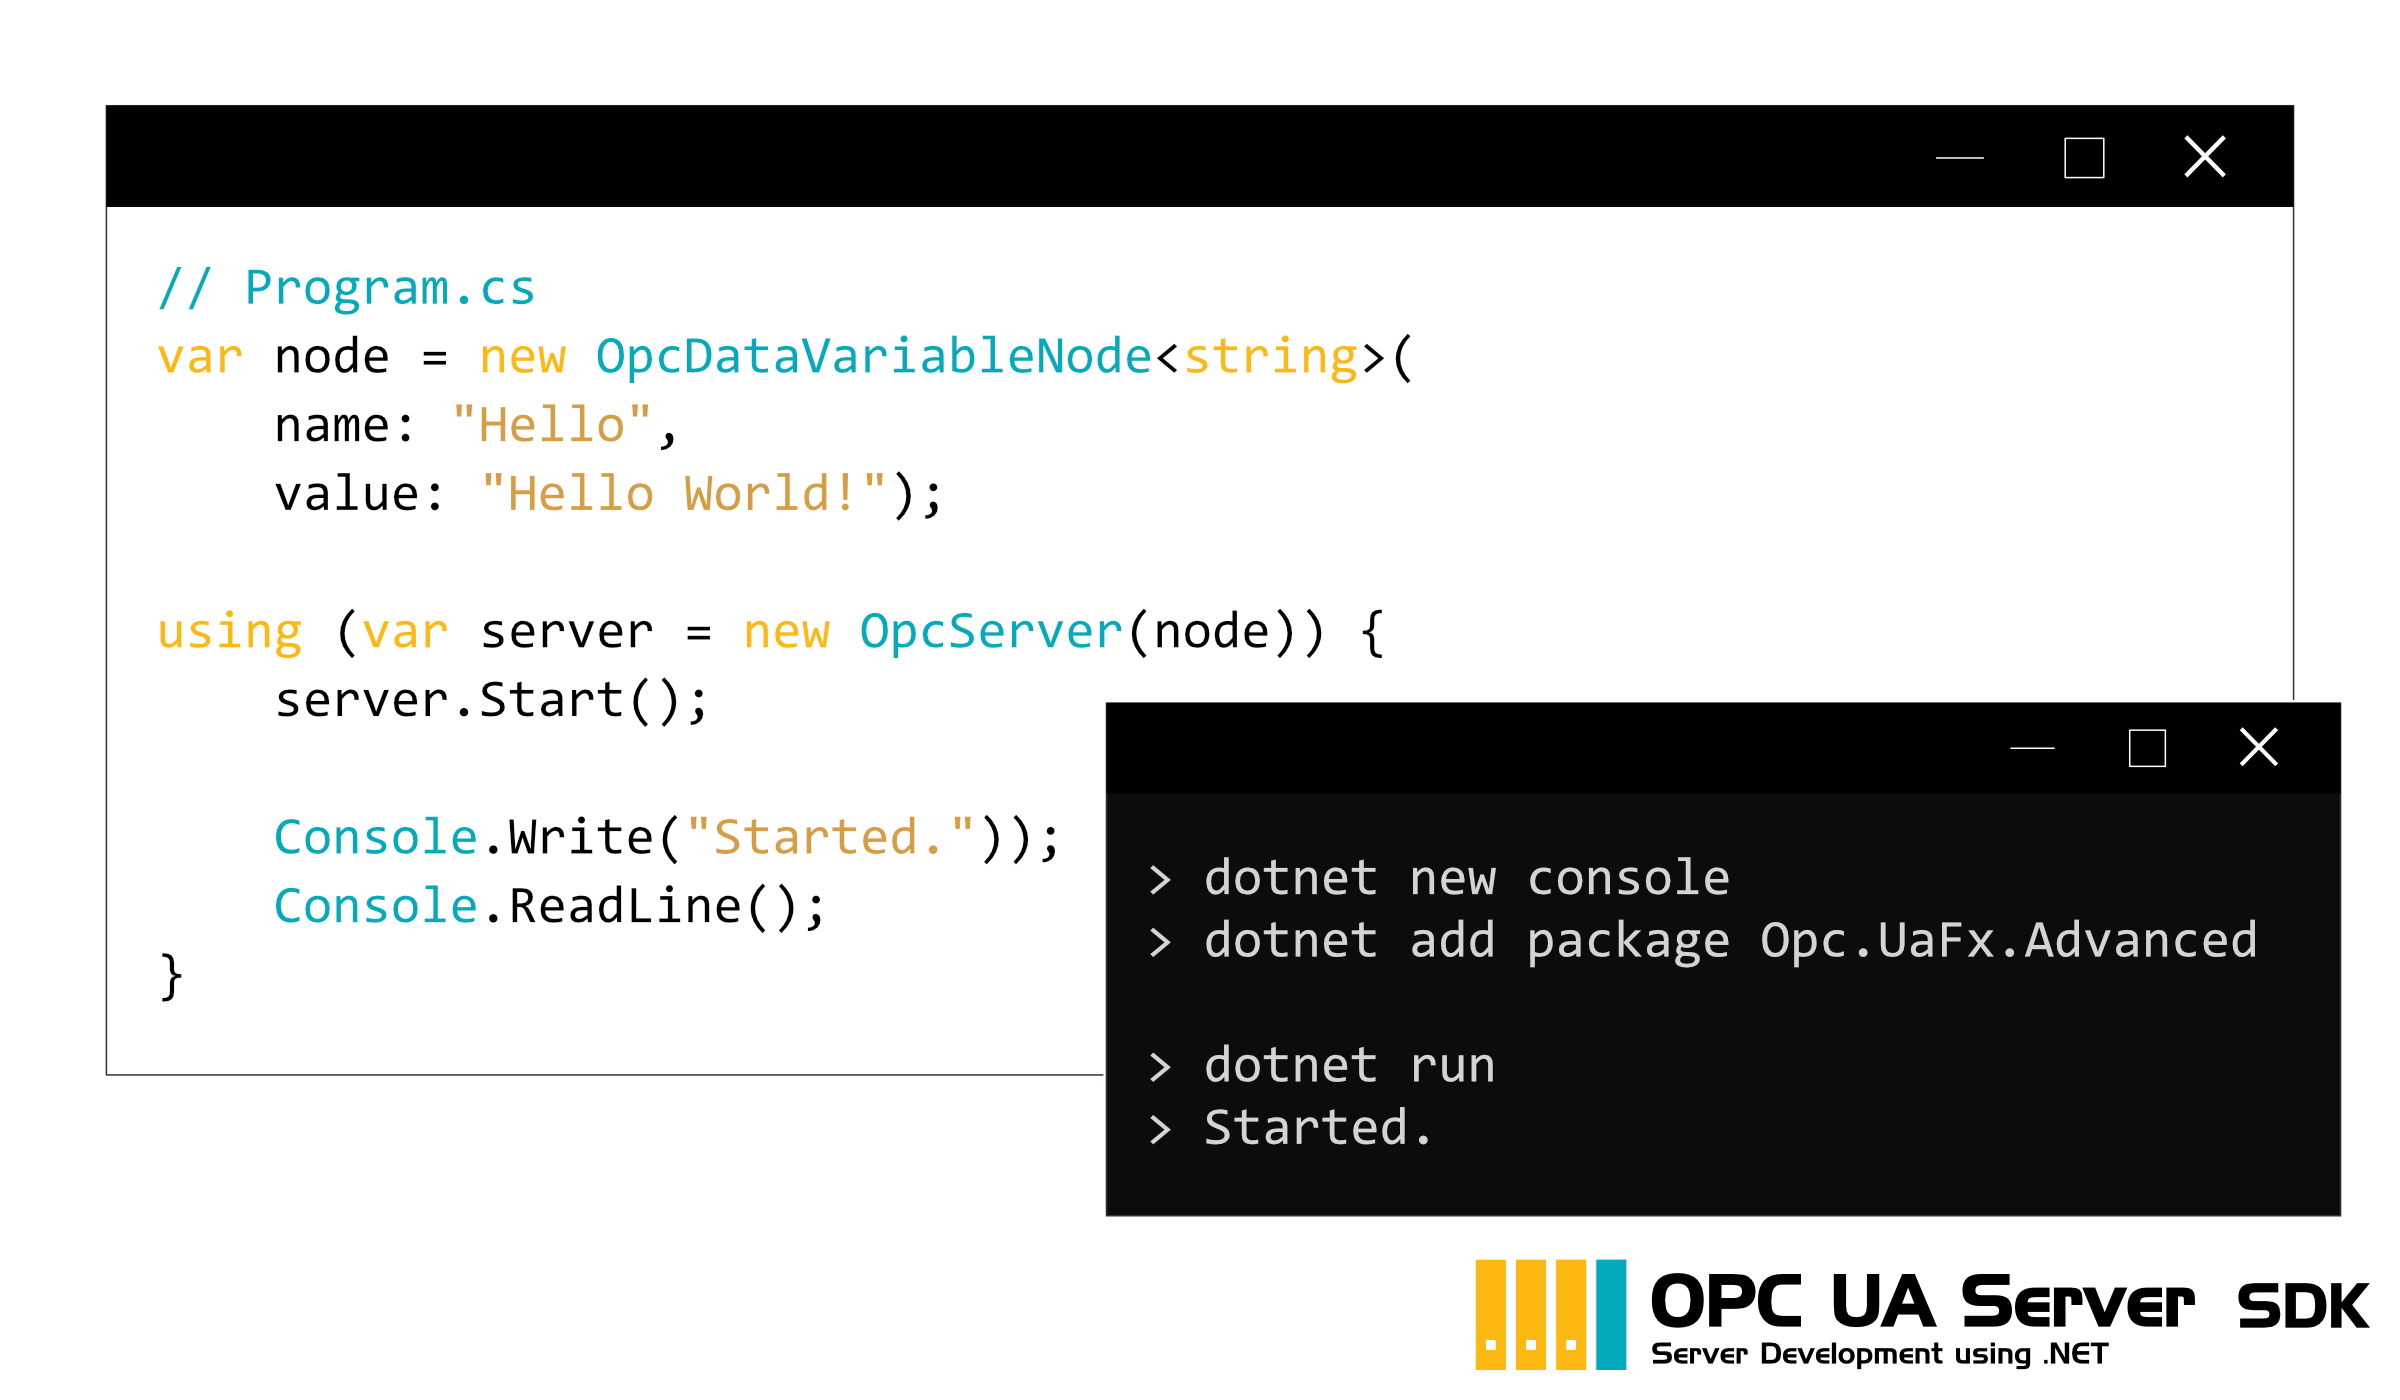 Code example for an OPC UA server that provides a string via a node.